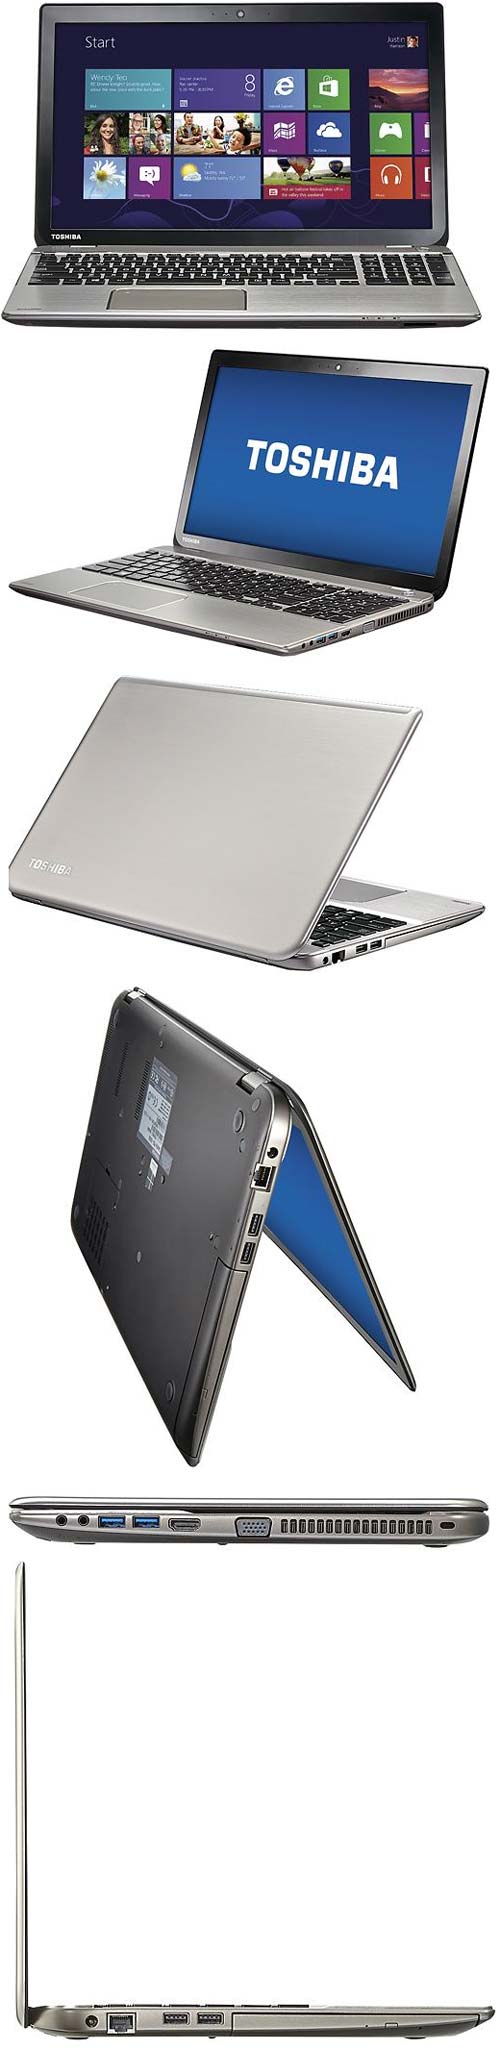 Toshiba предлагает ноутбук Satellite P55-A5200